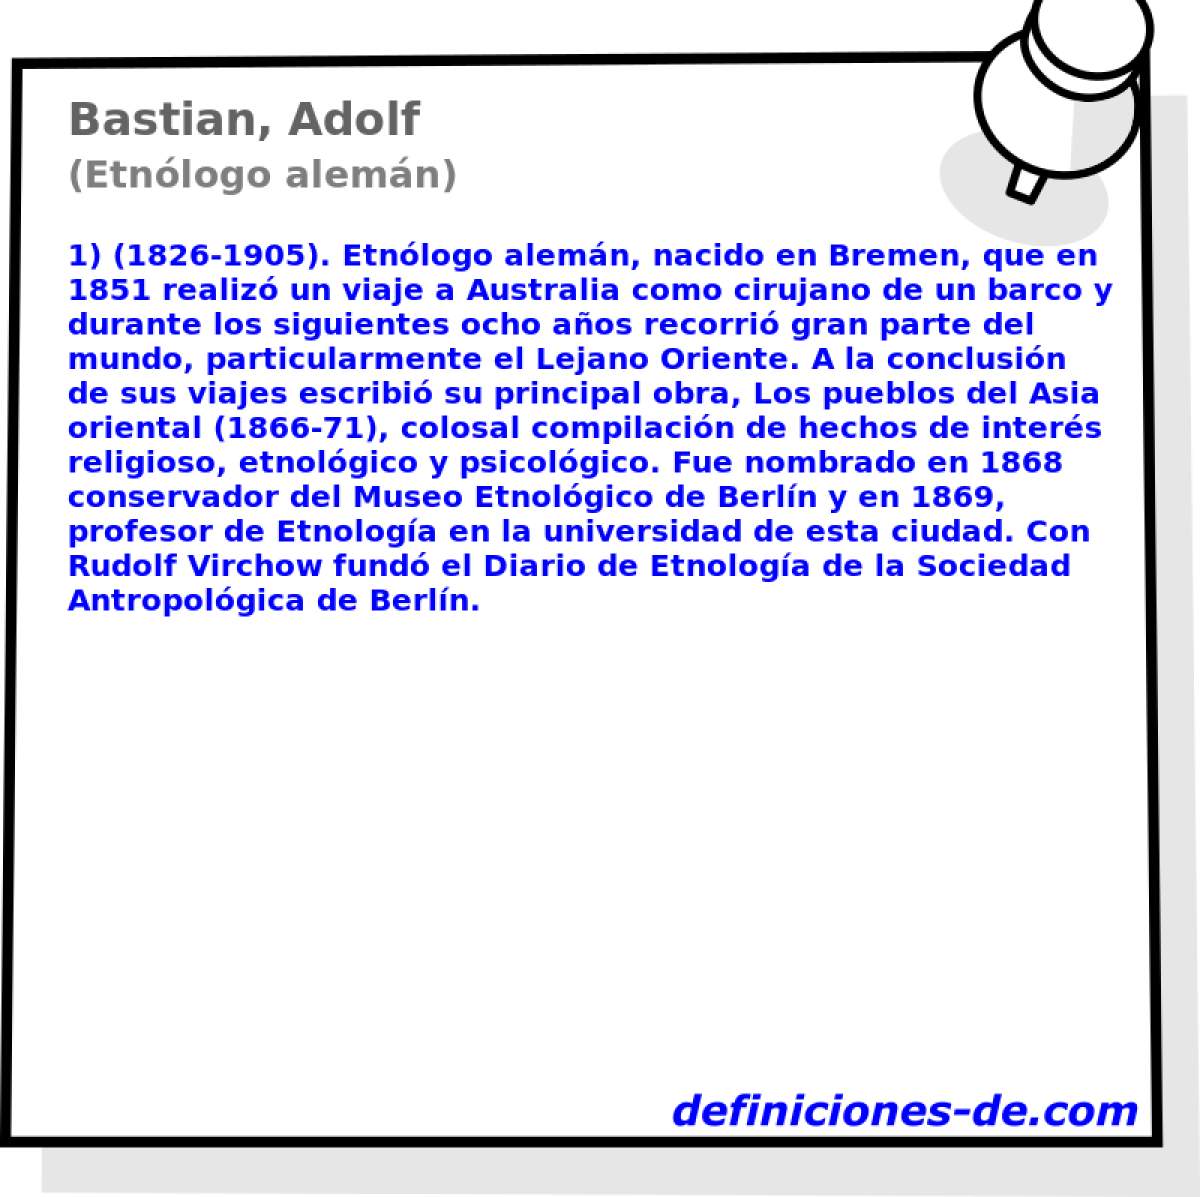 Bastian, Adolf (Etnlogo alemn)